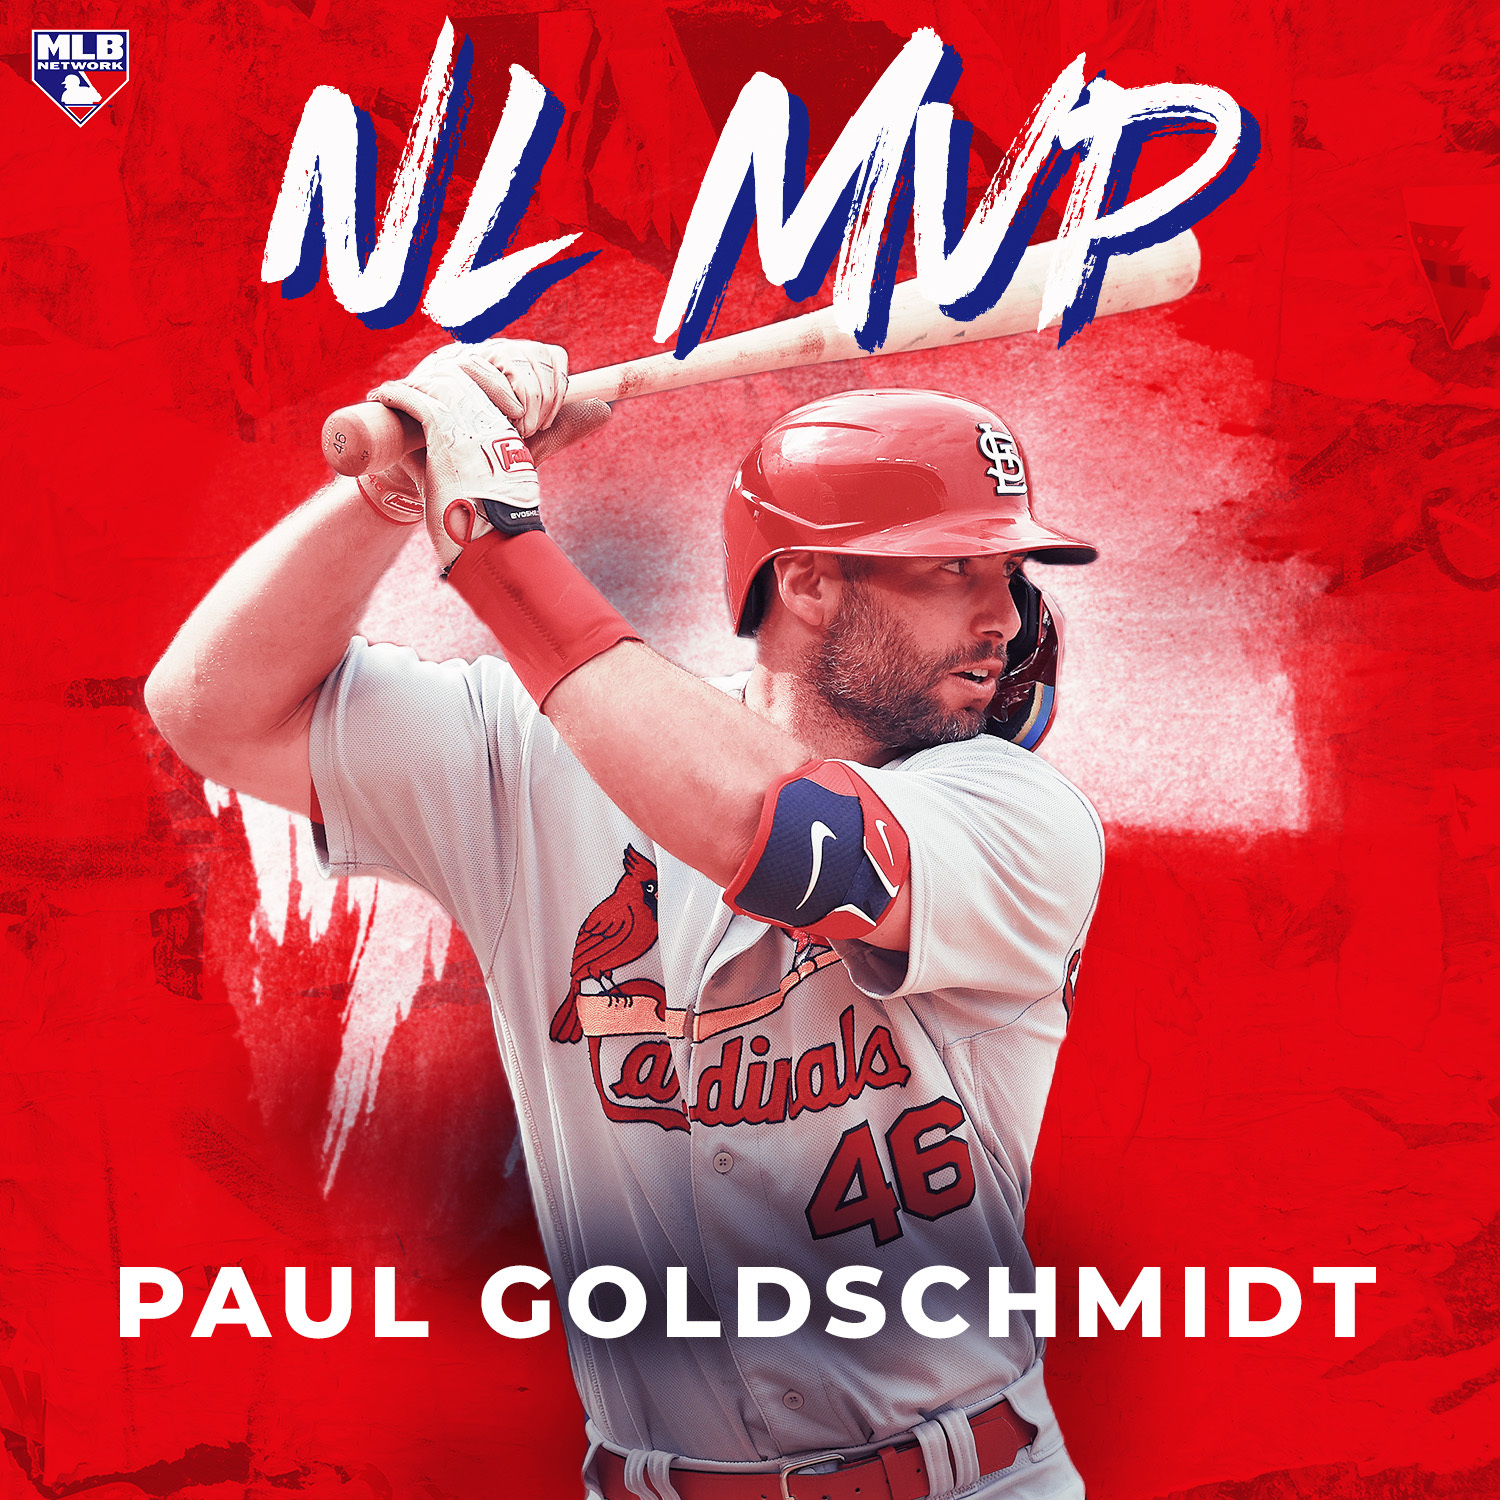 MLB Network on X: Goldy takes home the hardware! Paul Goldschmidt